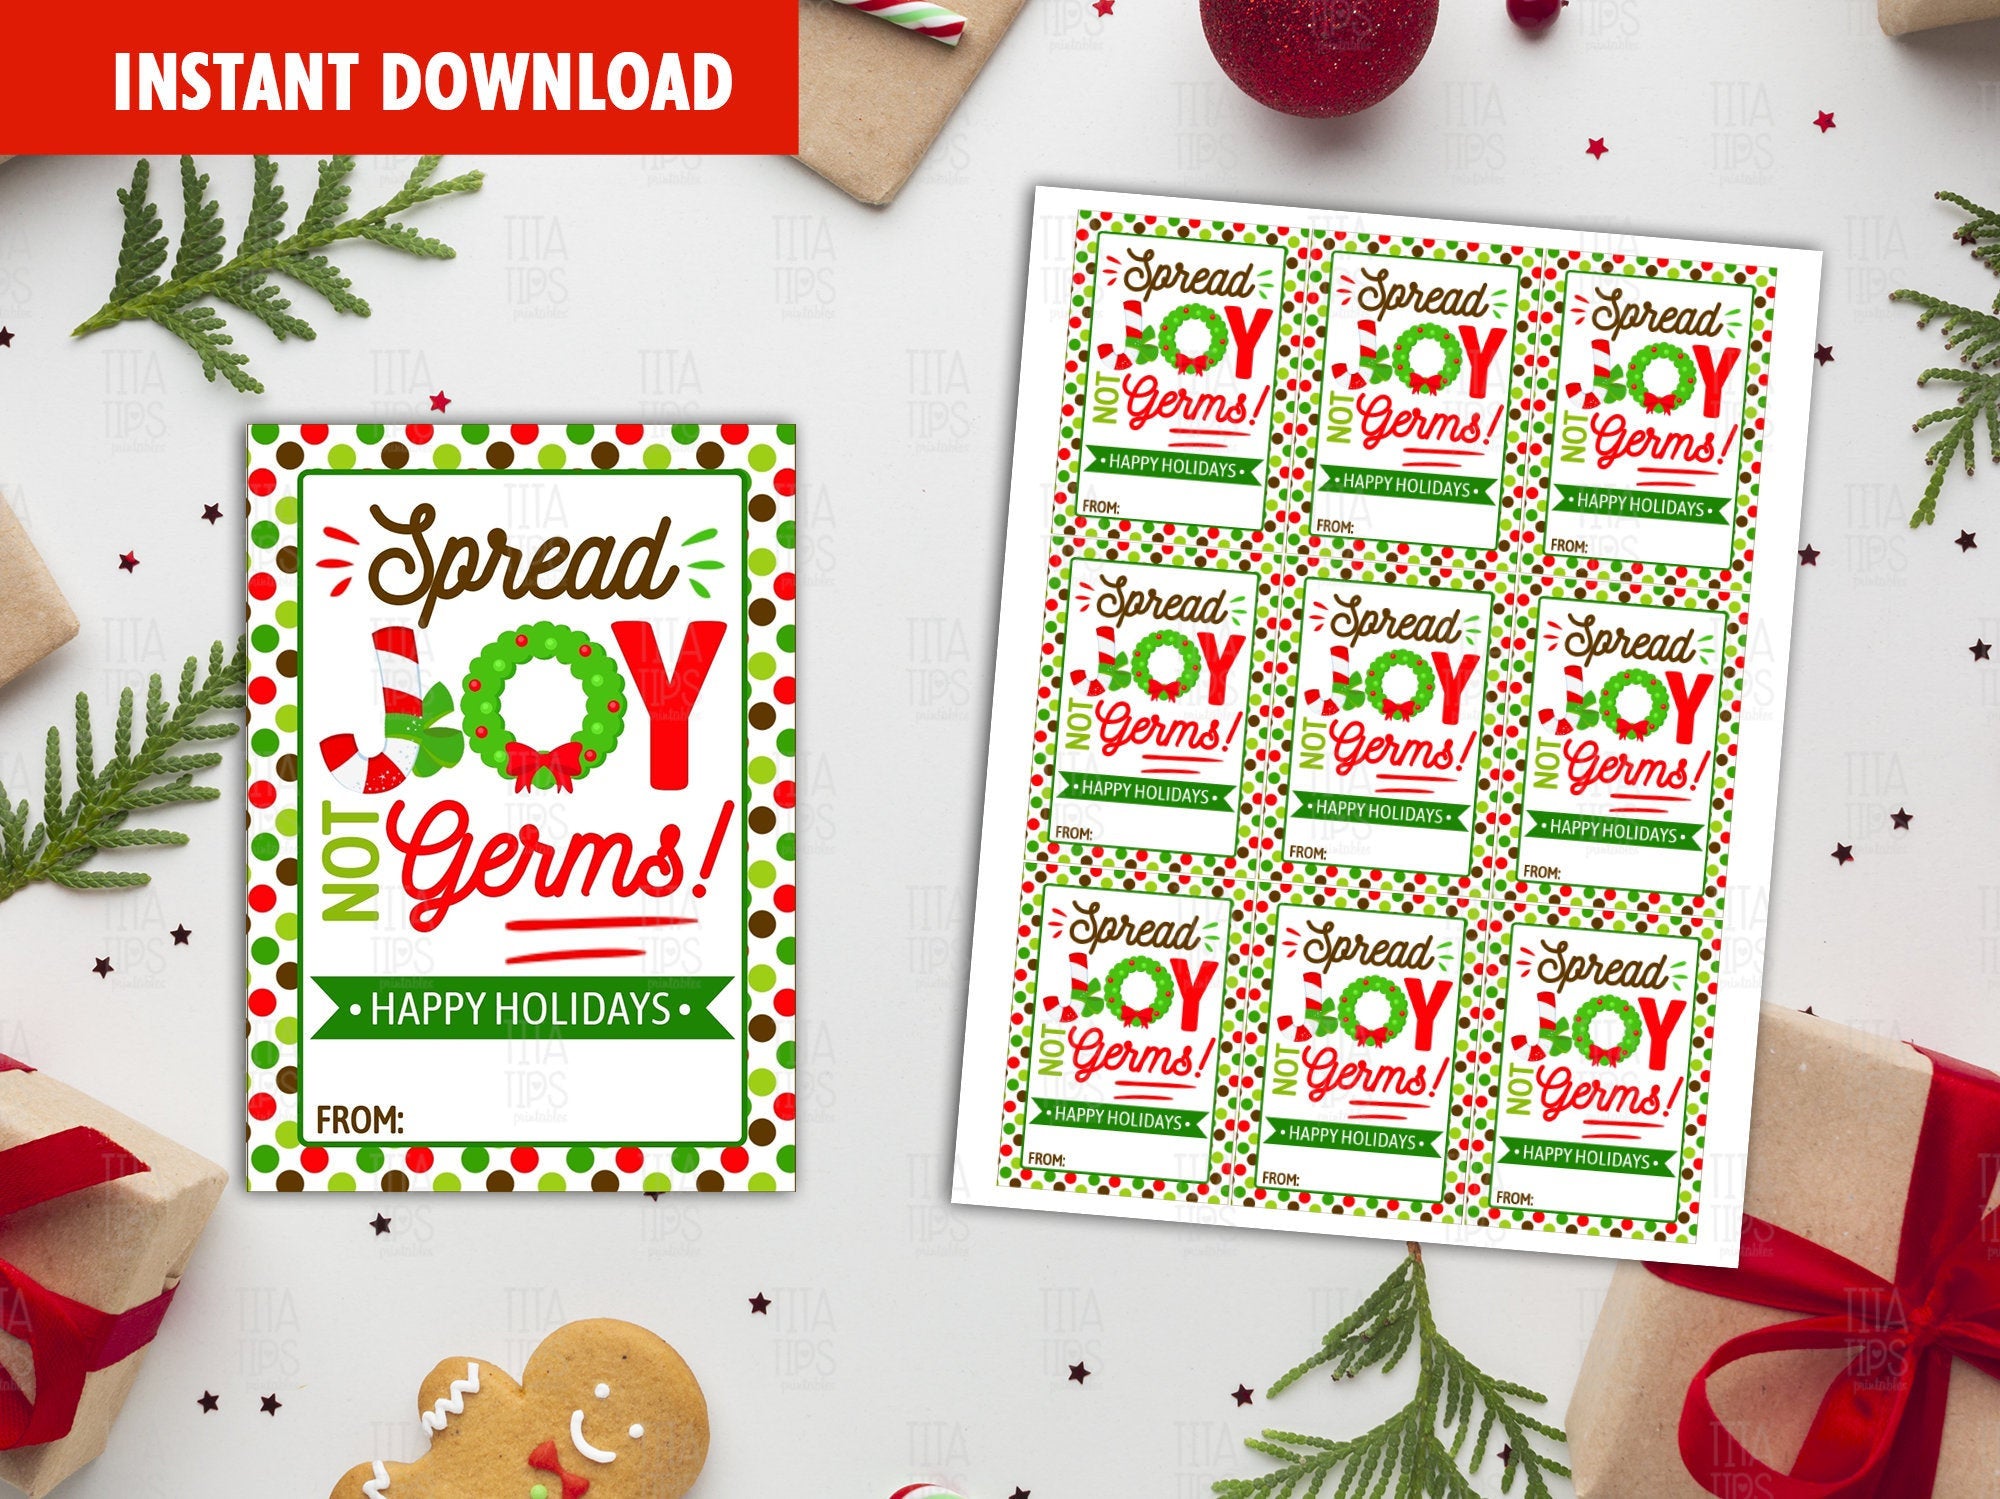 spread-joy-not-germs-printable-card-merry-christmas-favor-tags-class